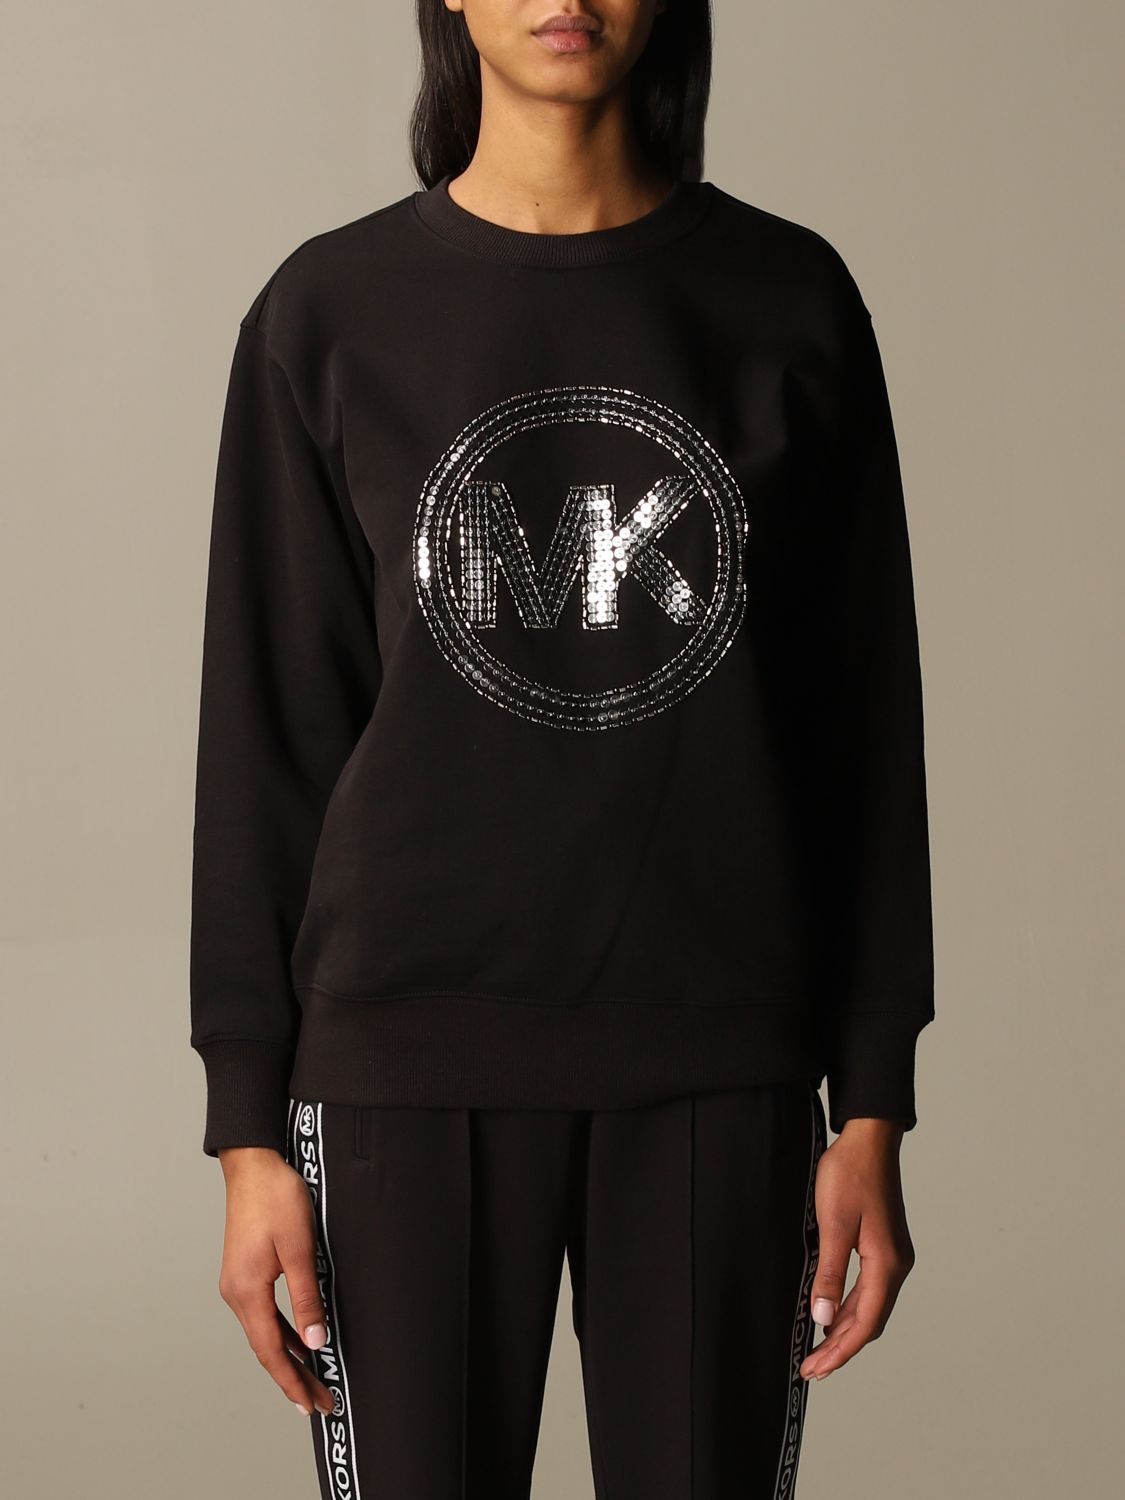 Joseph Banks Cabecear esposas Michael Kors Outlet: Michael crewneck sweatshirt with logo - Black | Michael  Kors sweatshirt MF05MR8BDD online on GIGLIO.COM